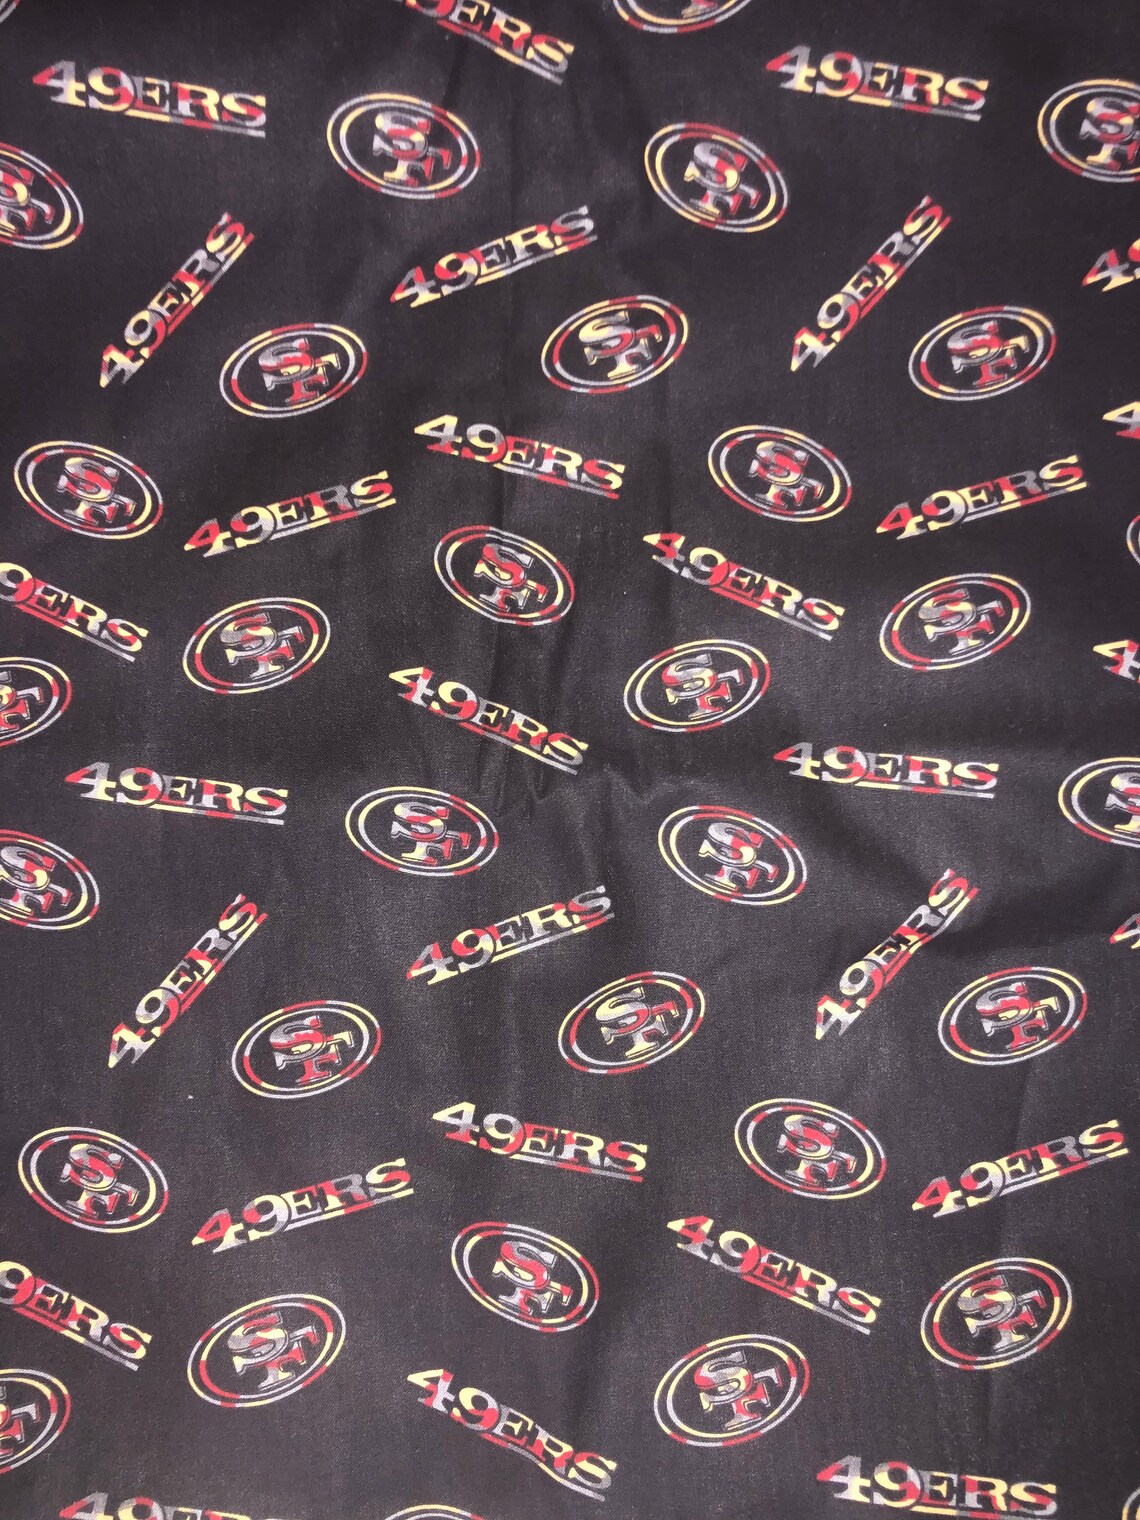 SF 49ers Cotton Print Fabric - Etsy